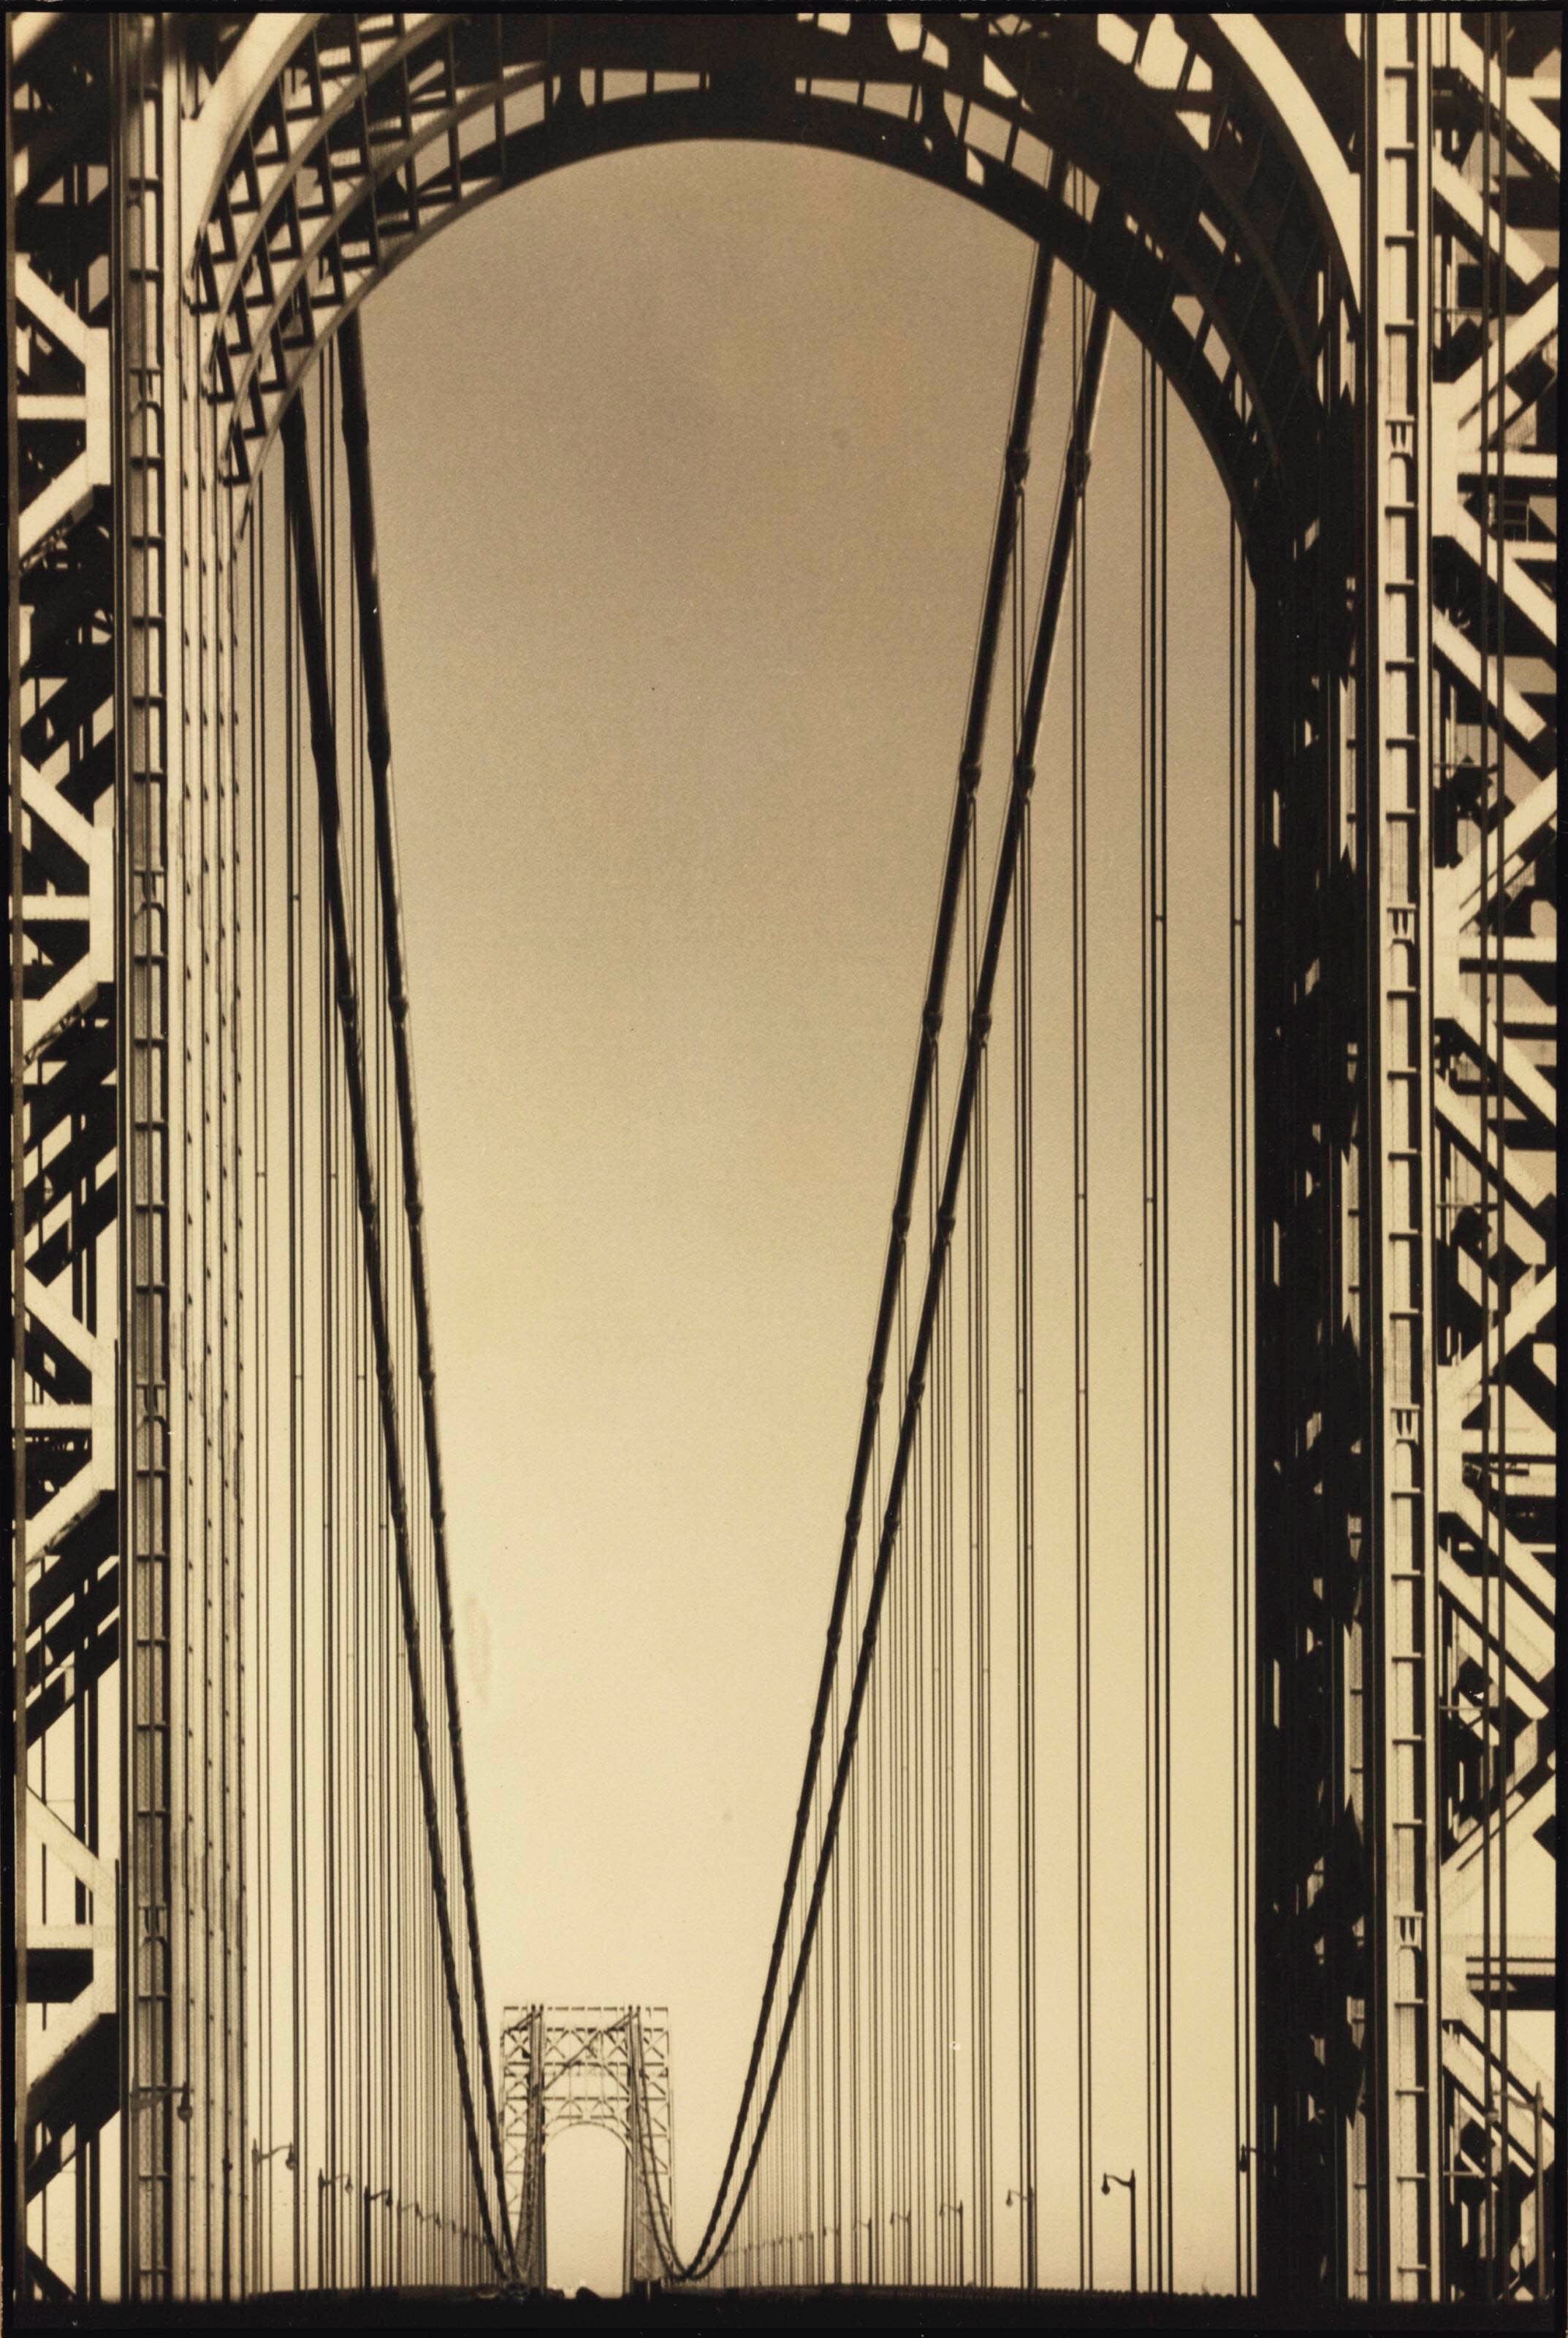 Мост Джорджа Вашингтона, 1933 год.  Фотограф Маргарет Бурк-Уайт